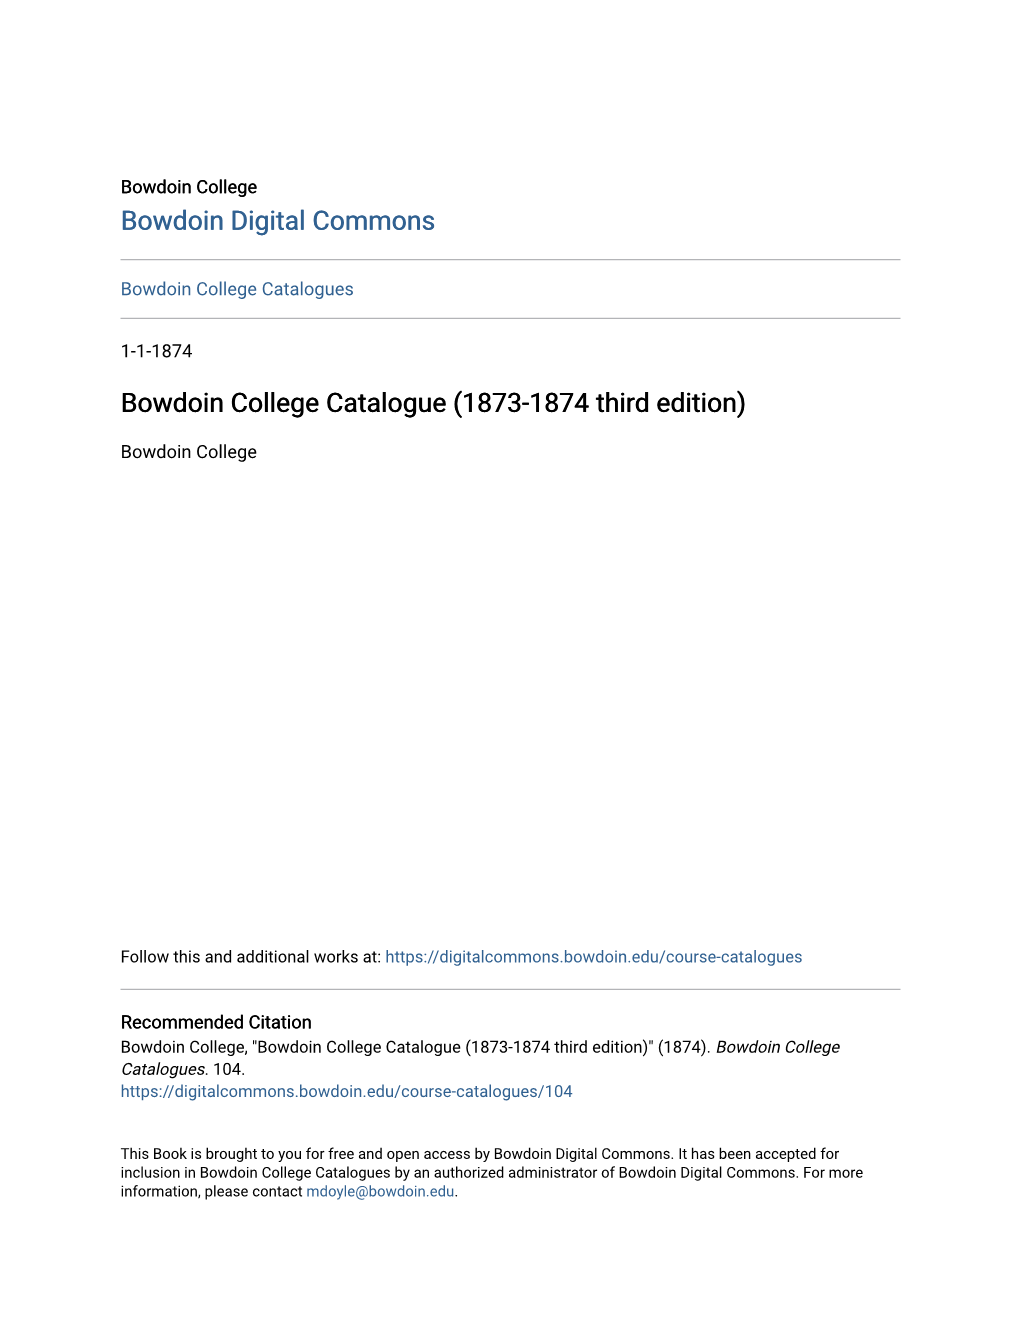 Bowdoin College Catalogue (1873-1874 Third Edition)